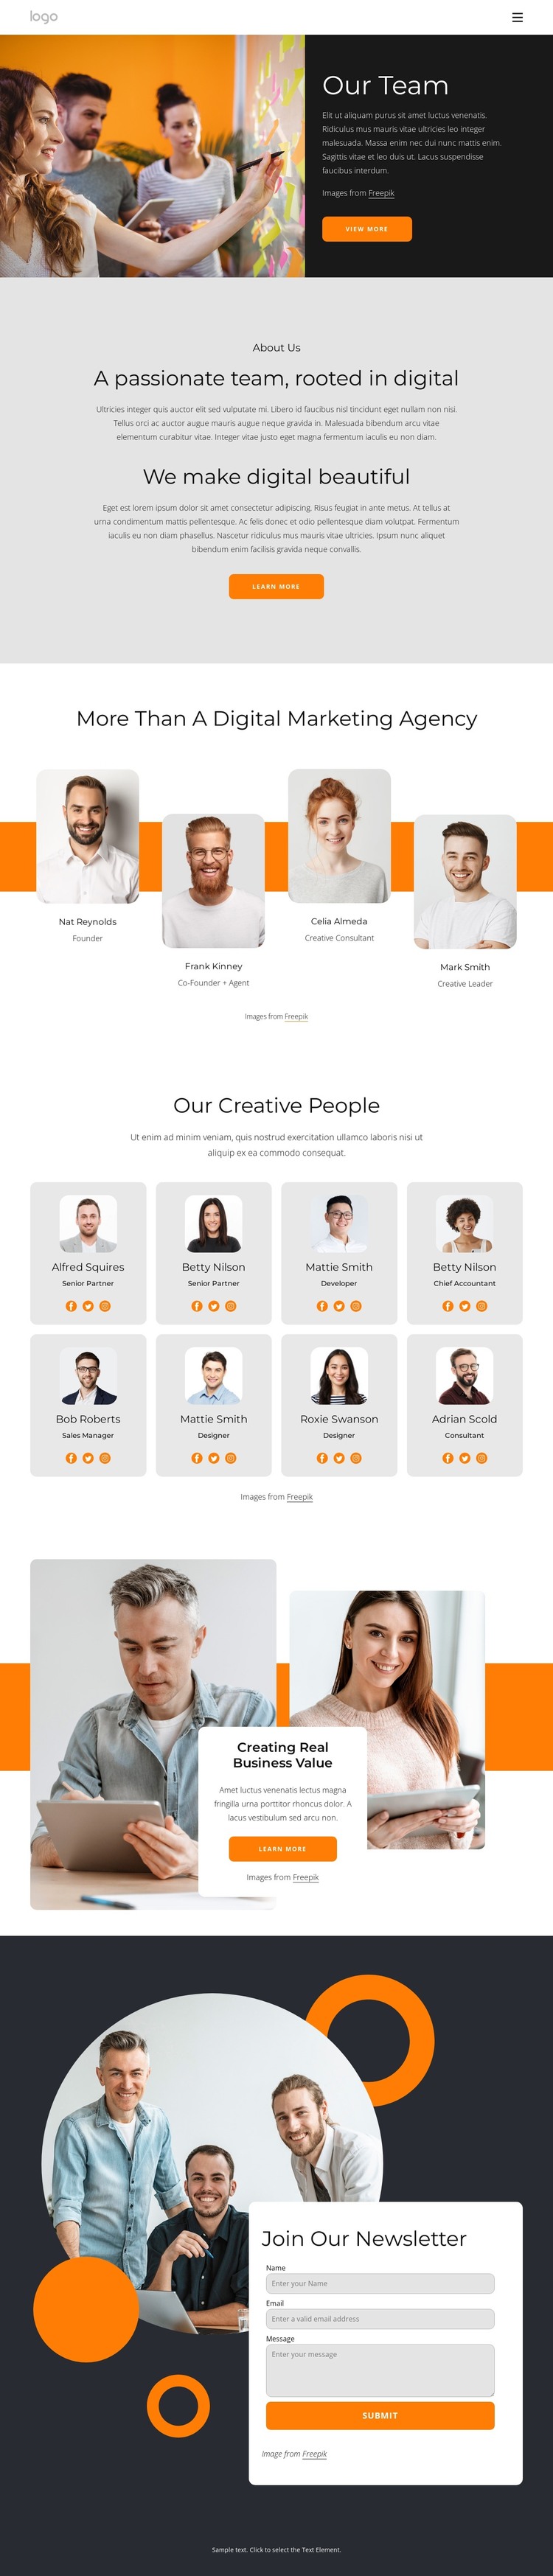 We are creative people with big dreams Web Design